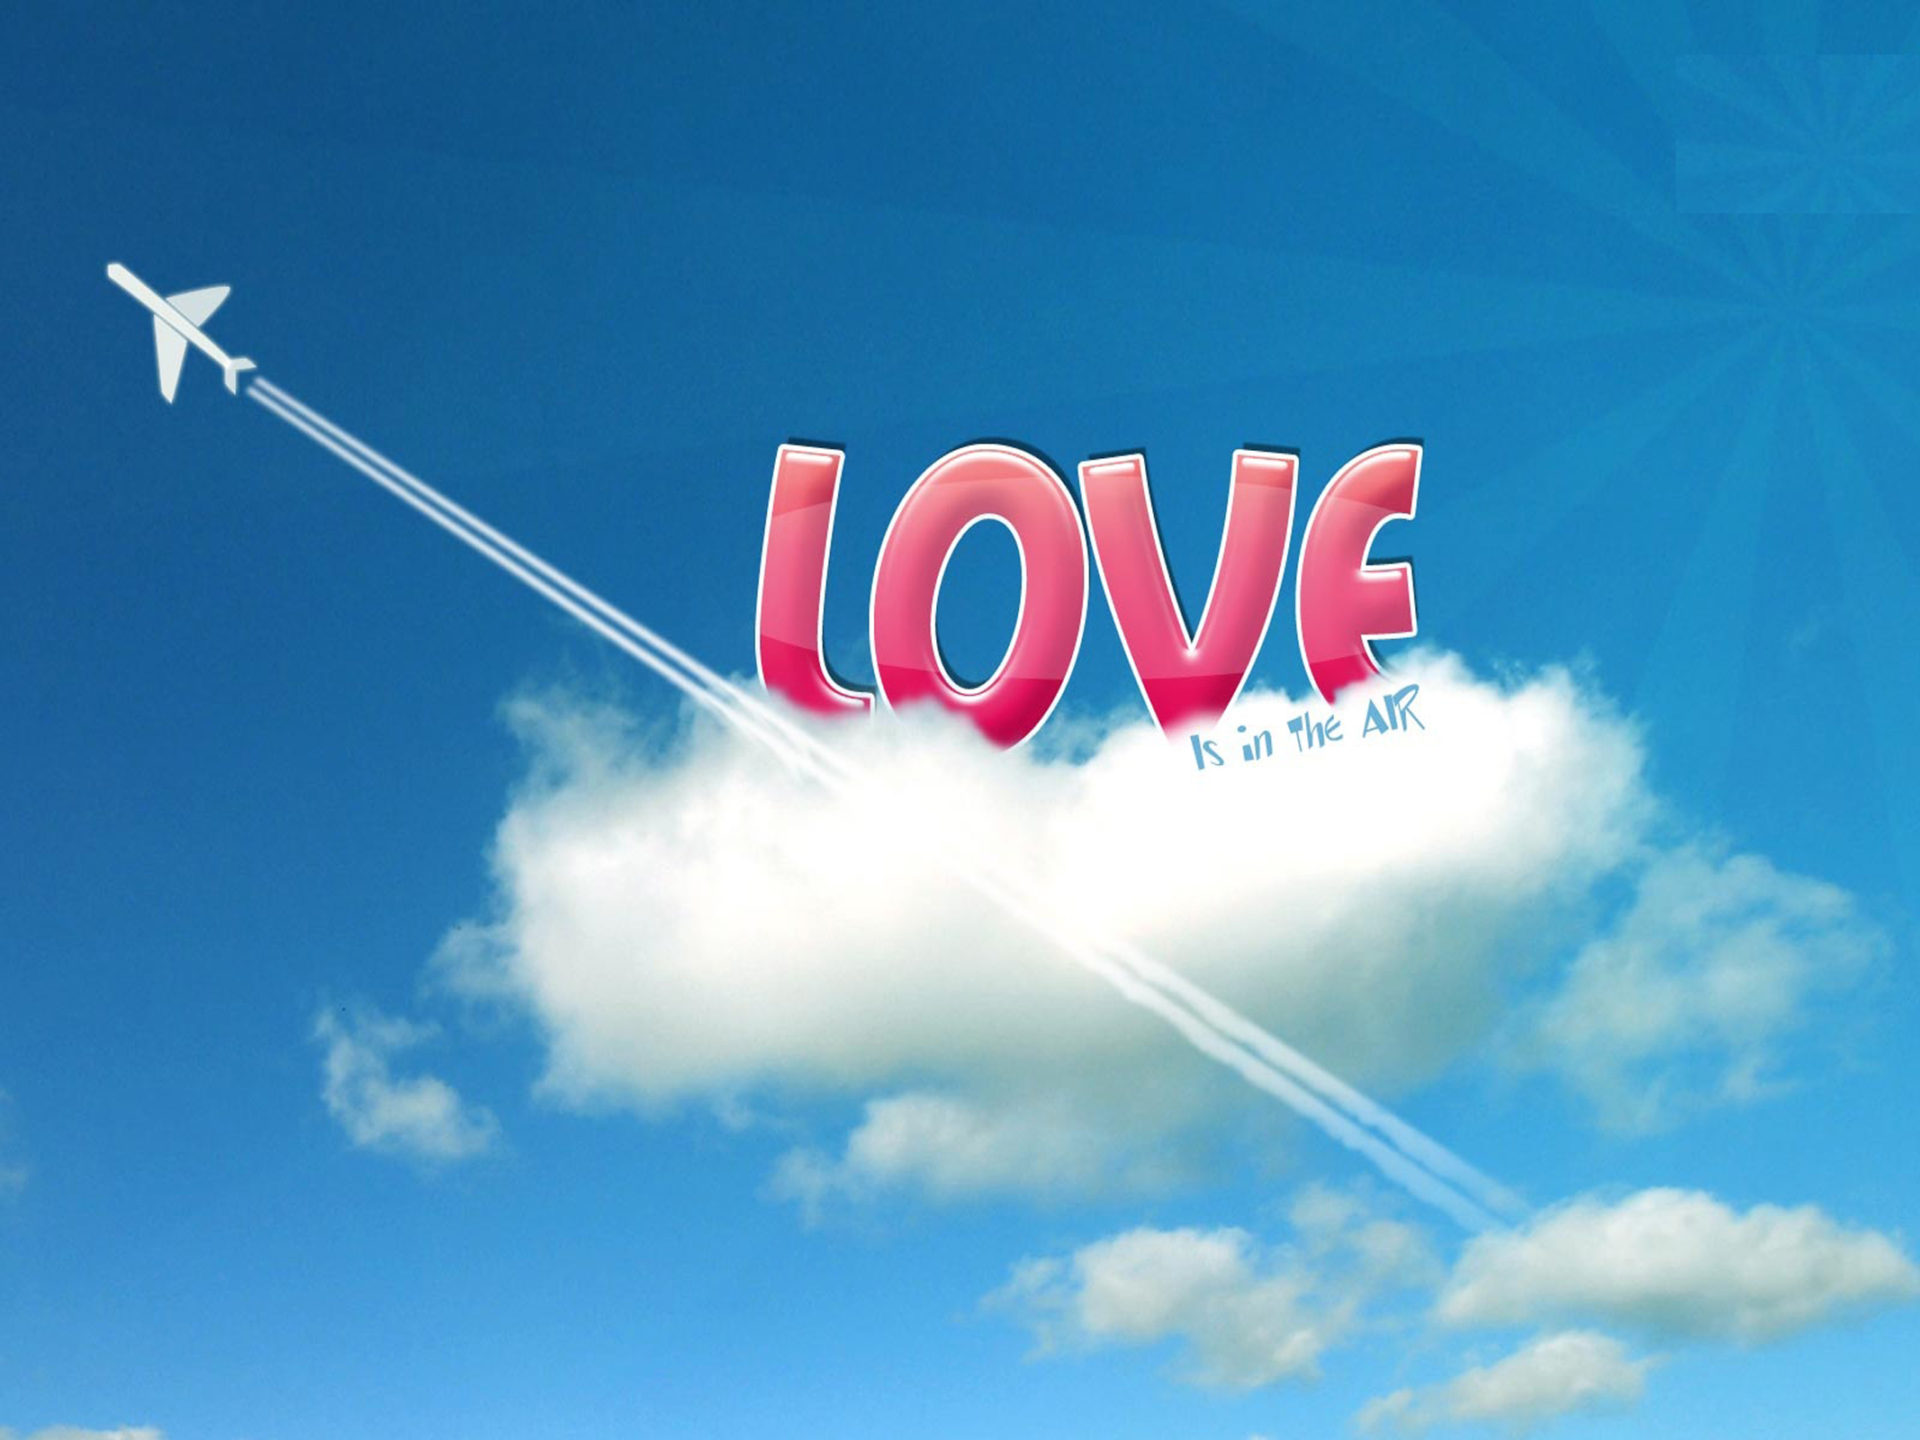 Love In A Air HD Wallpaper, Wallpaper13.com